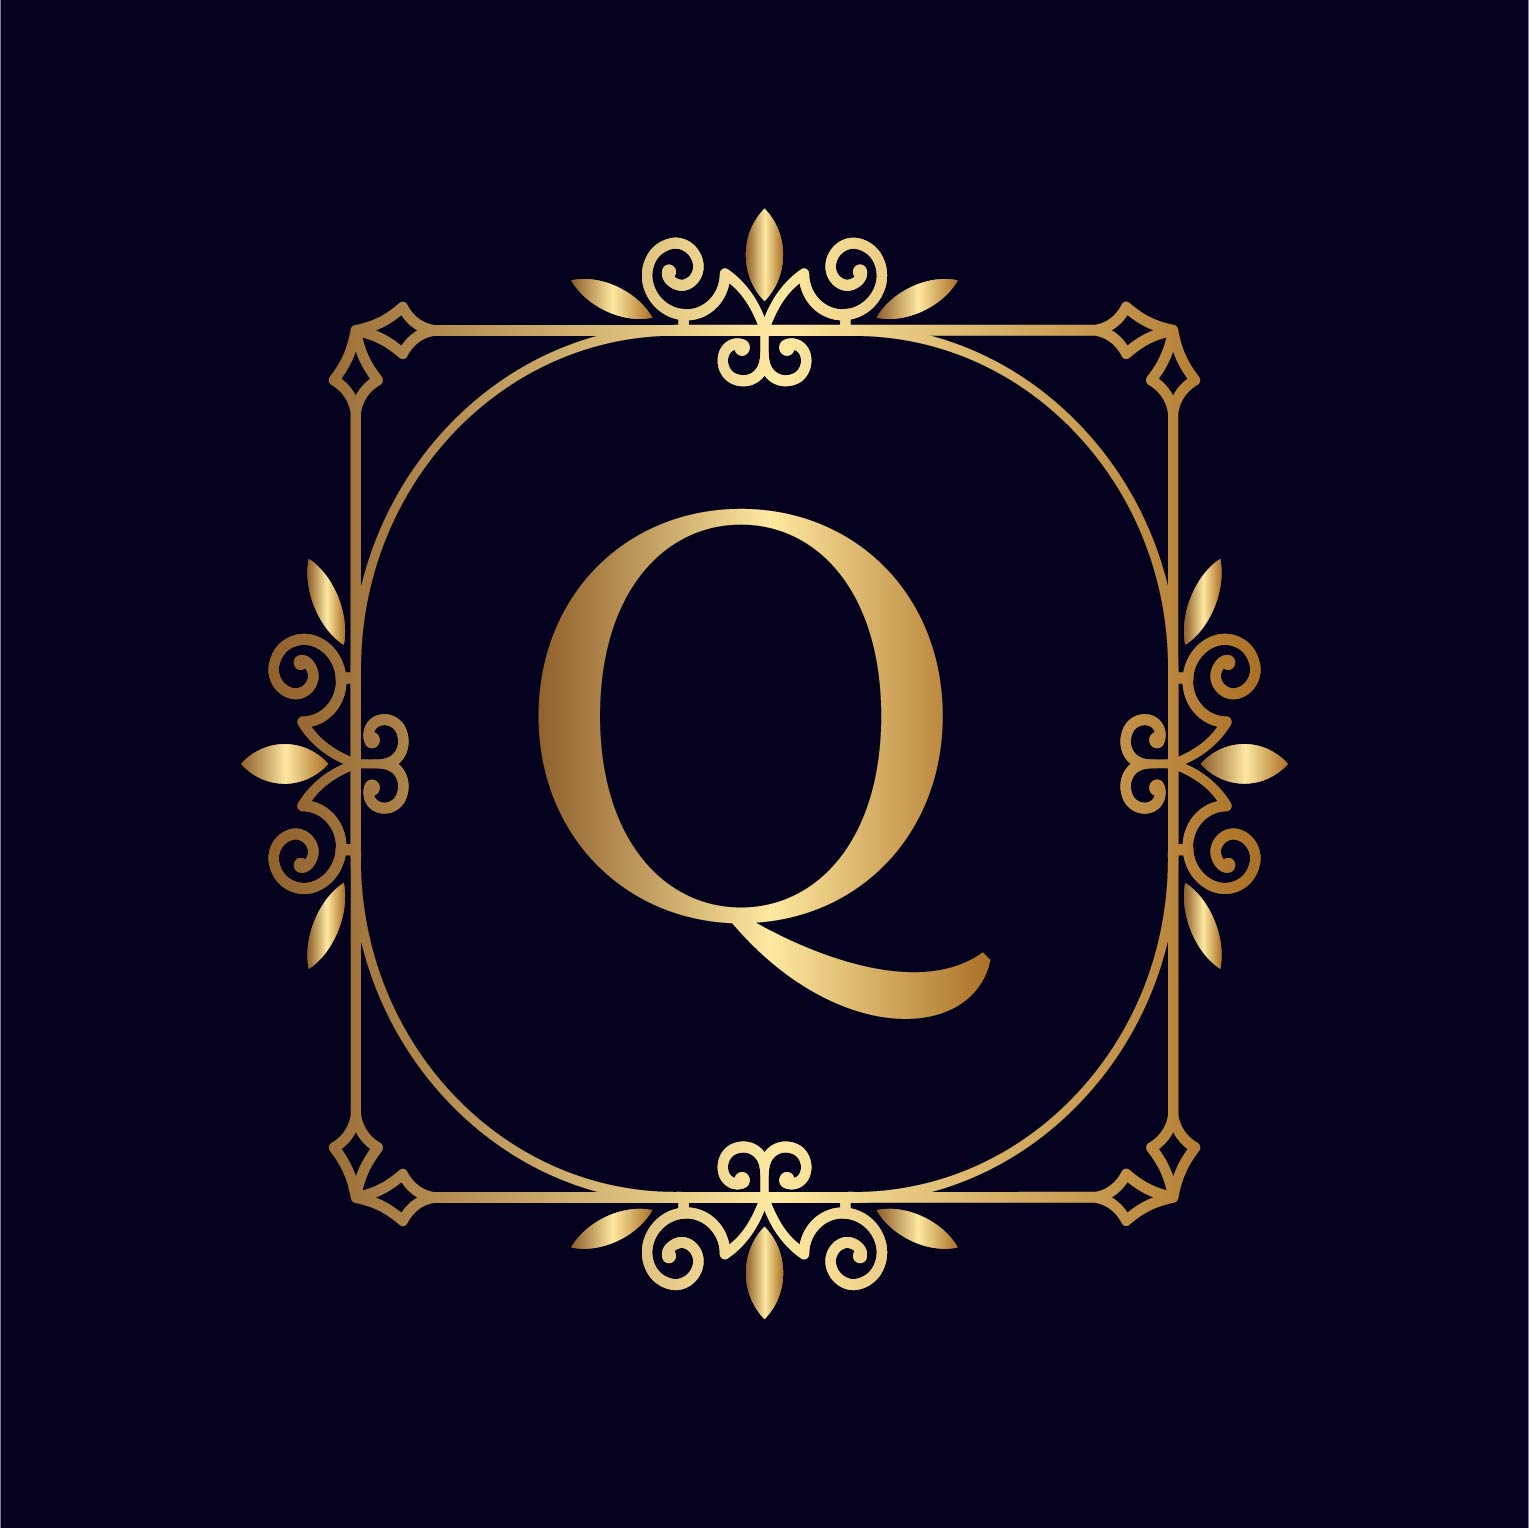 Artistic Gold Letter Q Logos Design preview image.